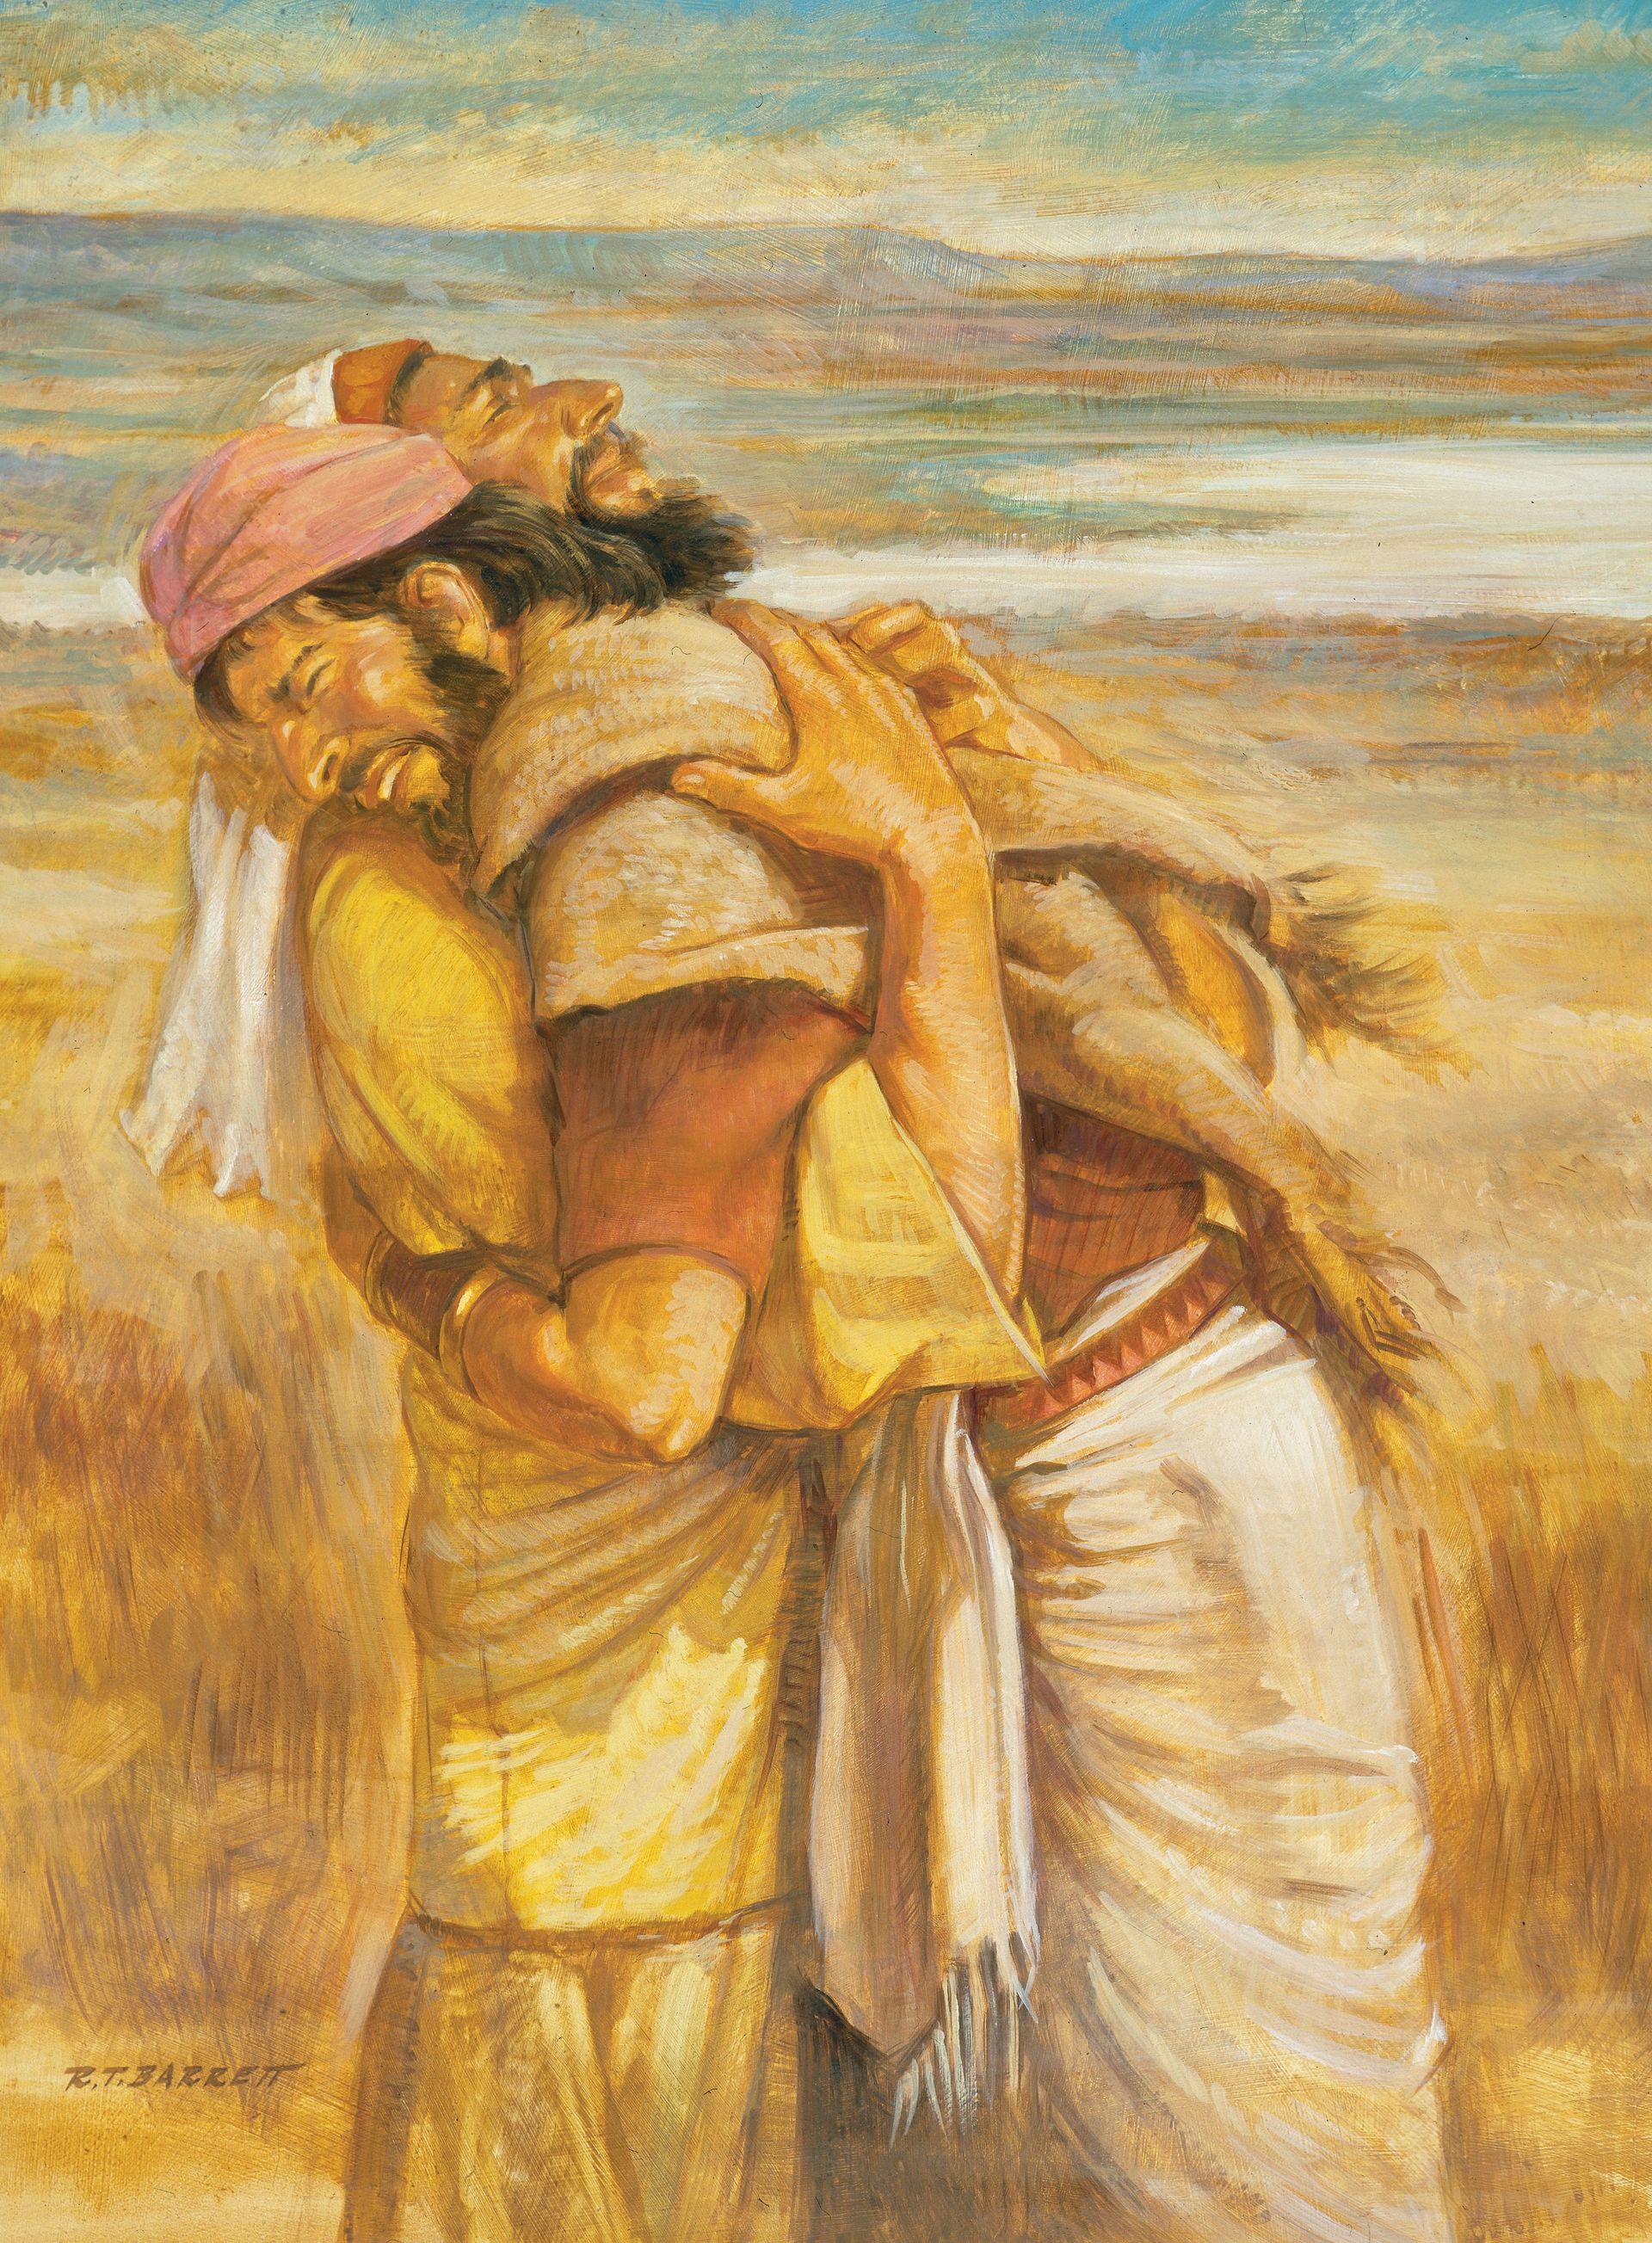 Esau and Jacob Embracing, by Robert T. Barrett